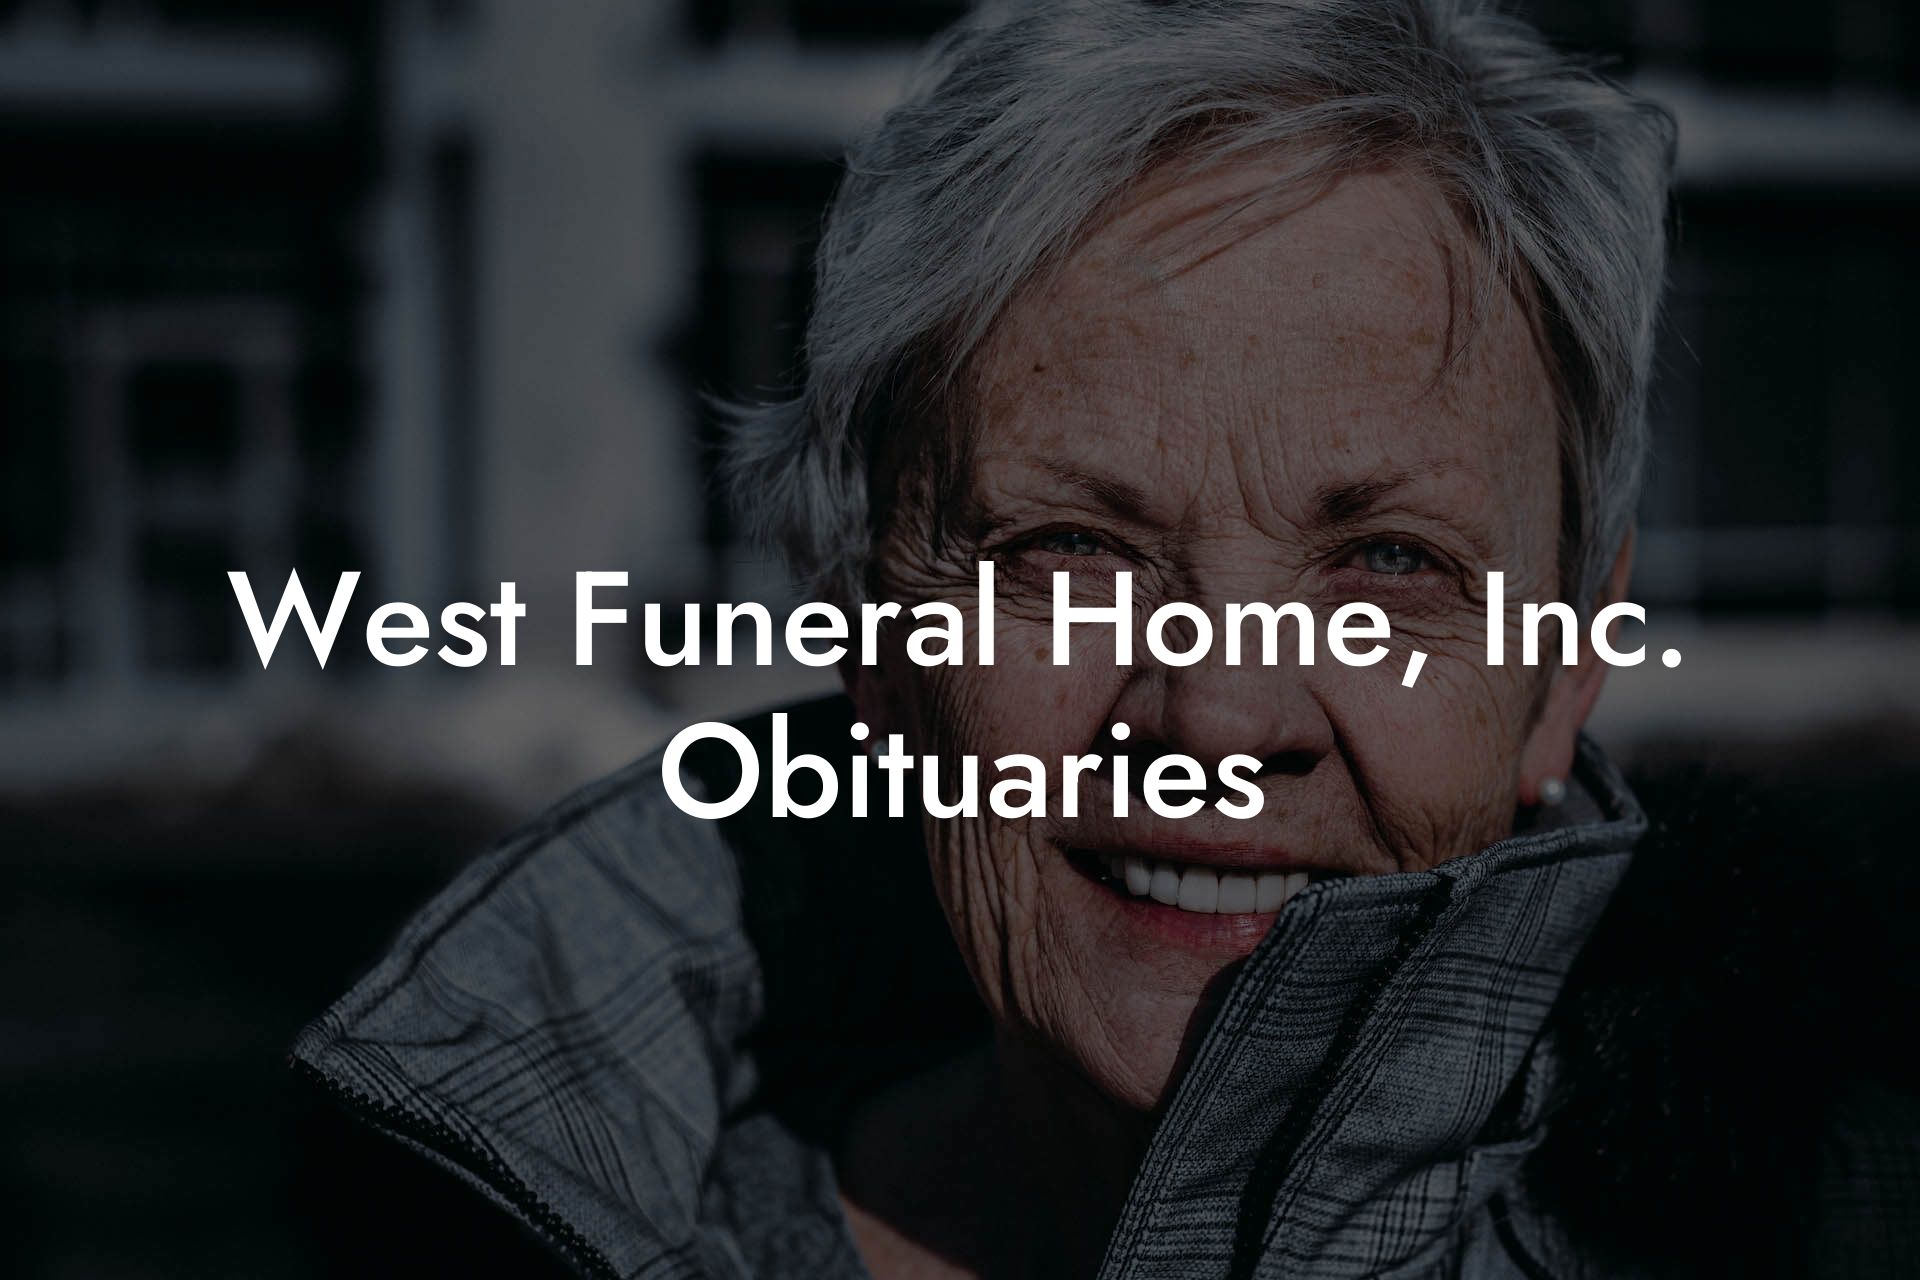 West Funeral Home, Inc. Obituaries